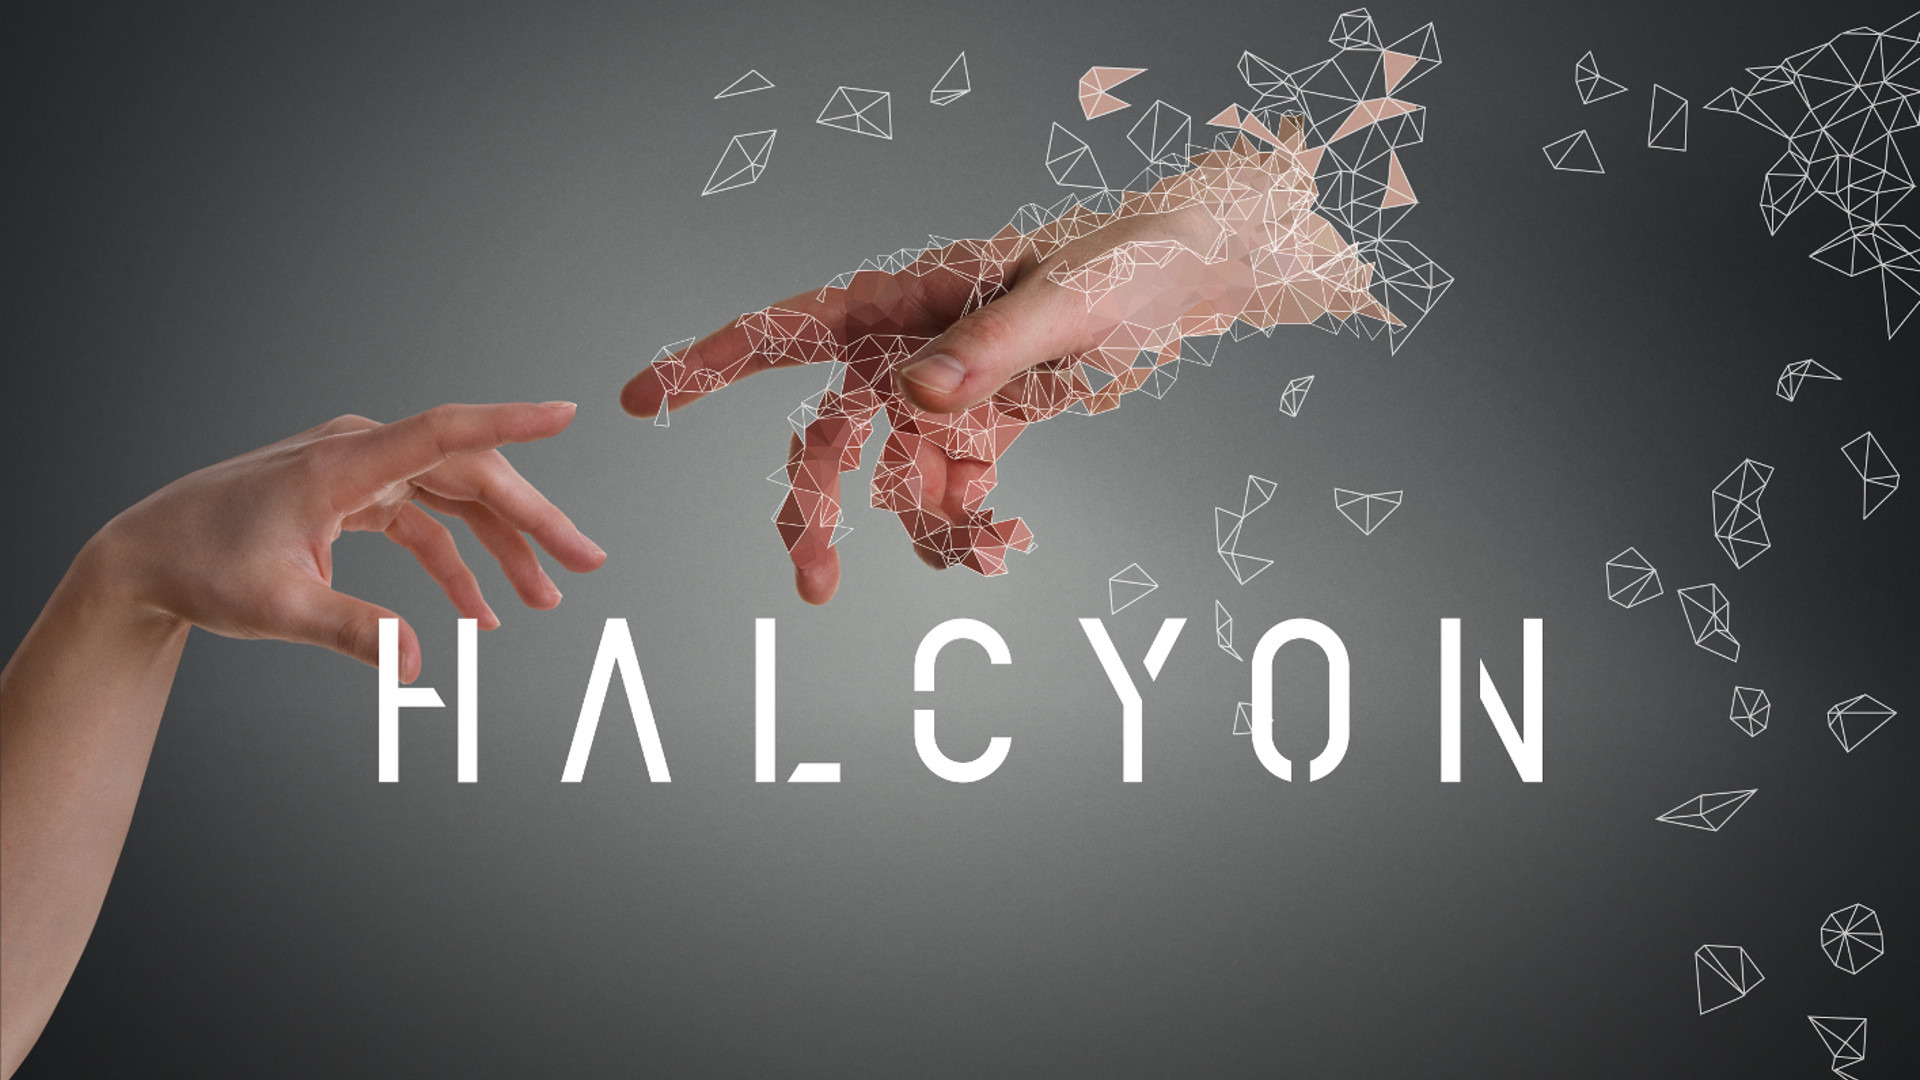 Show Halcyon